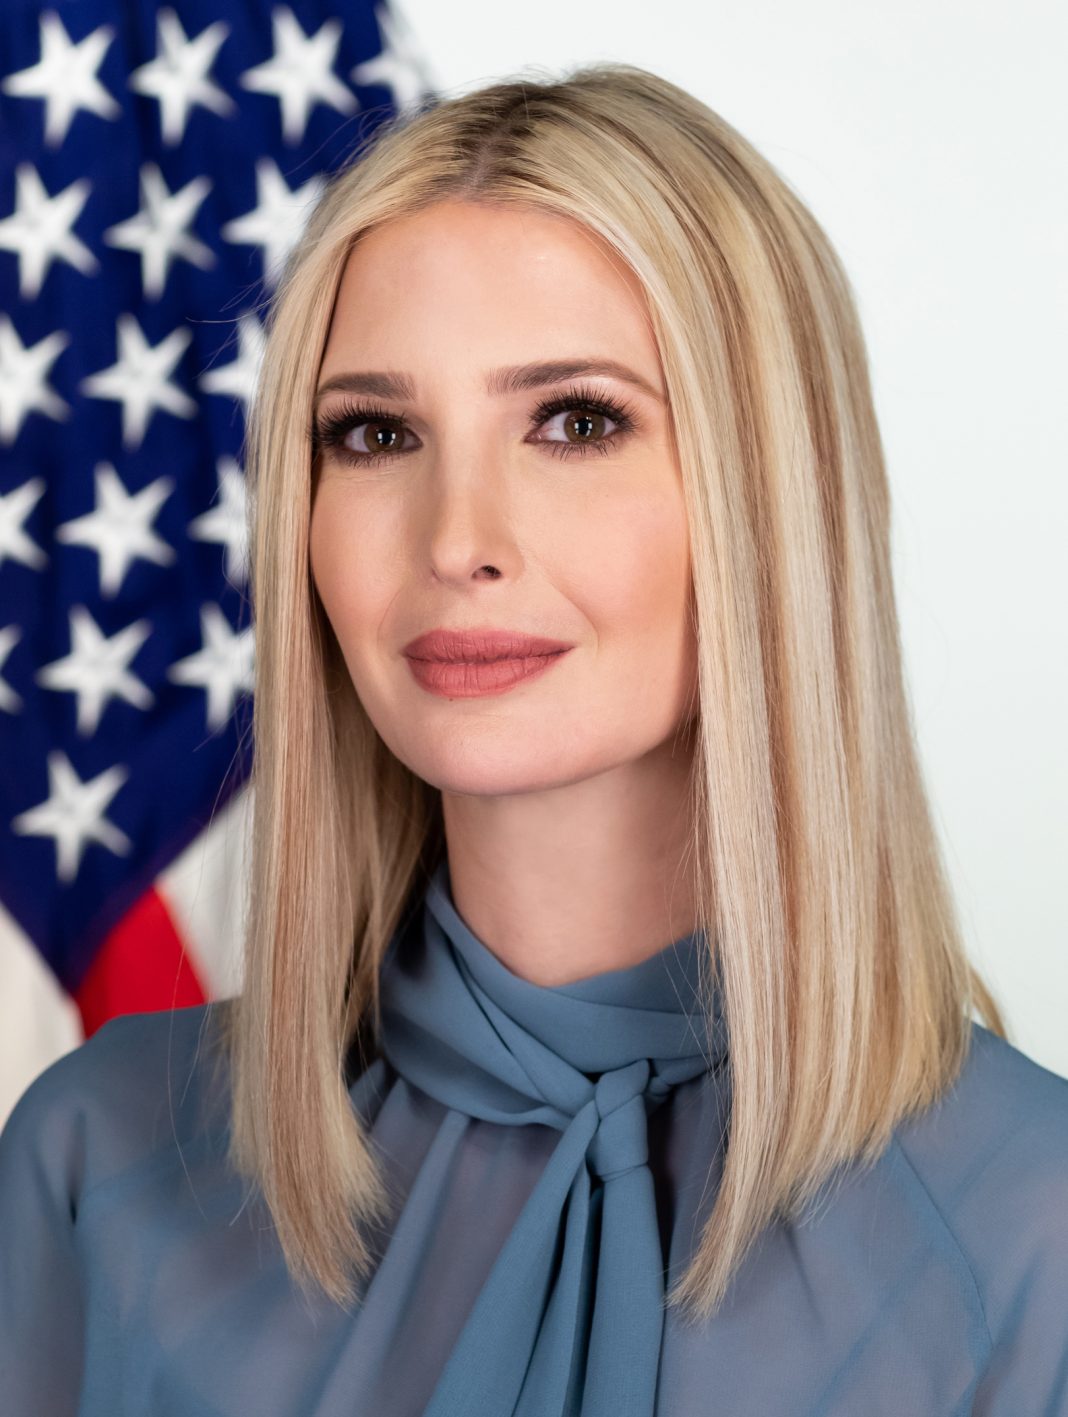 Ivanka Trump official white house portrait photo taken by Andrea Hanks